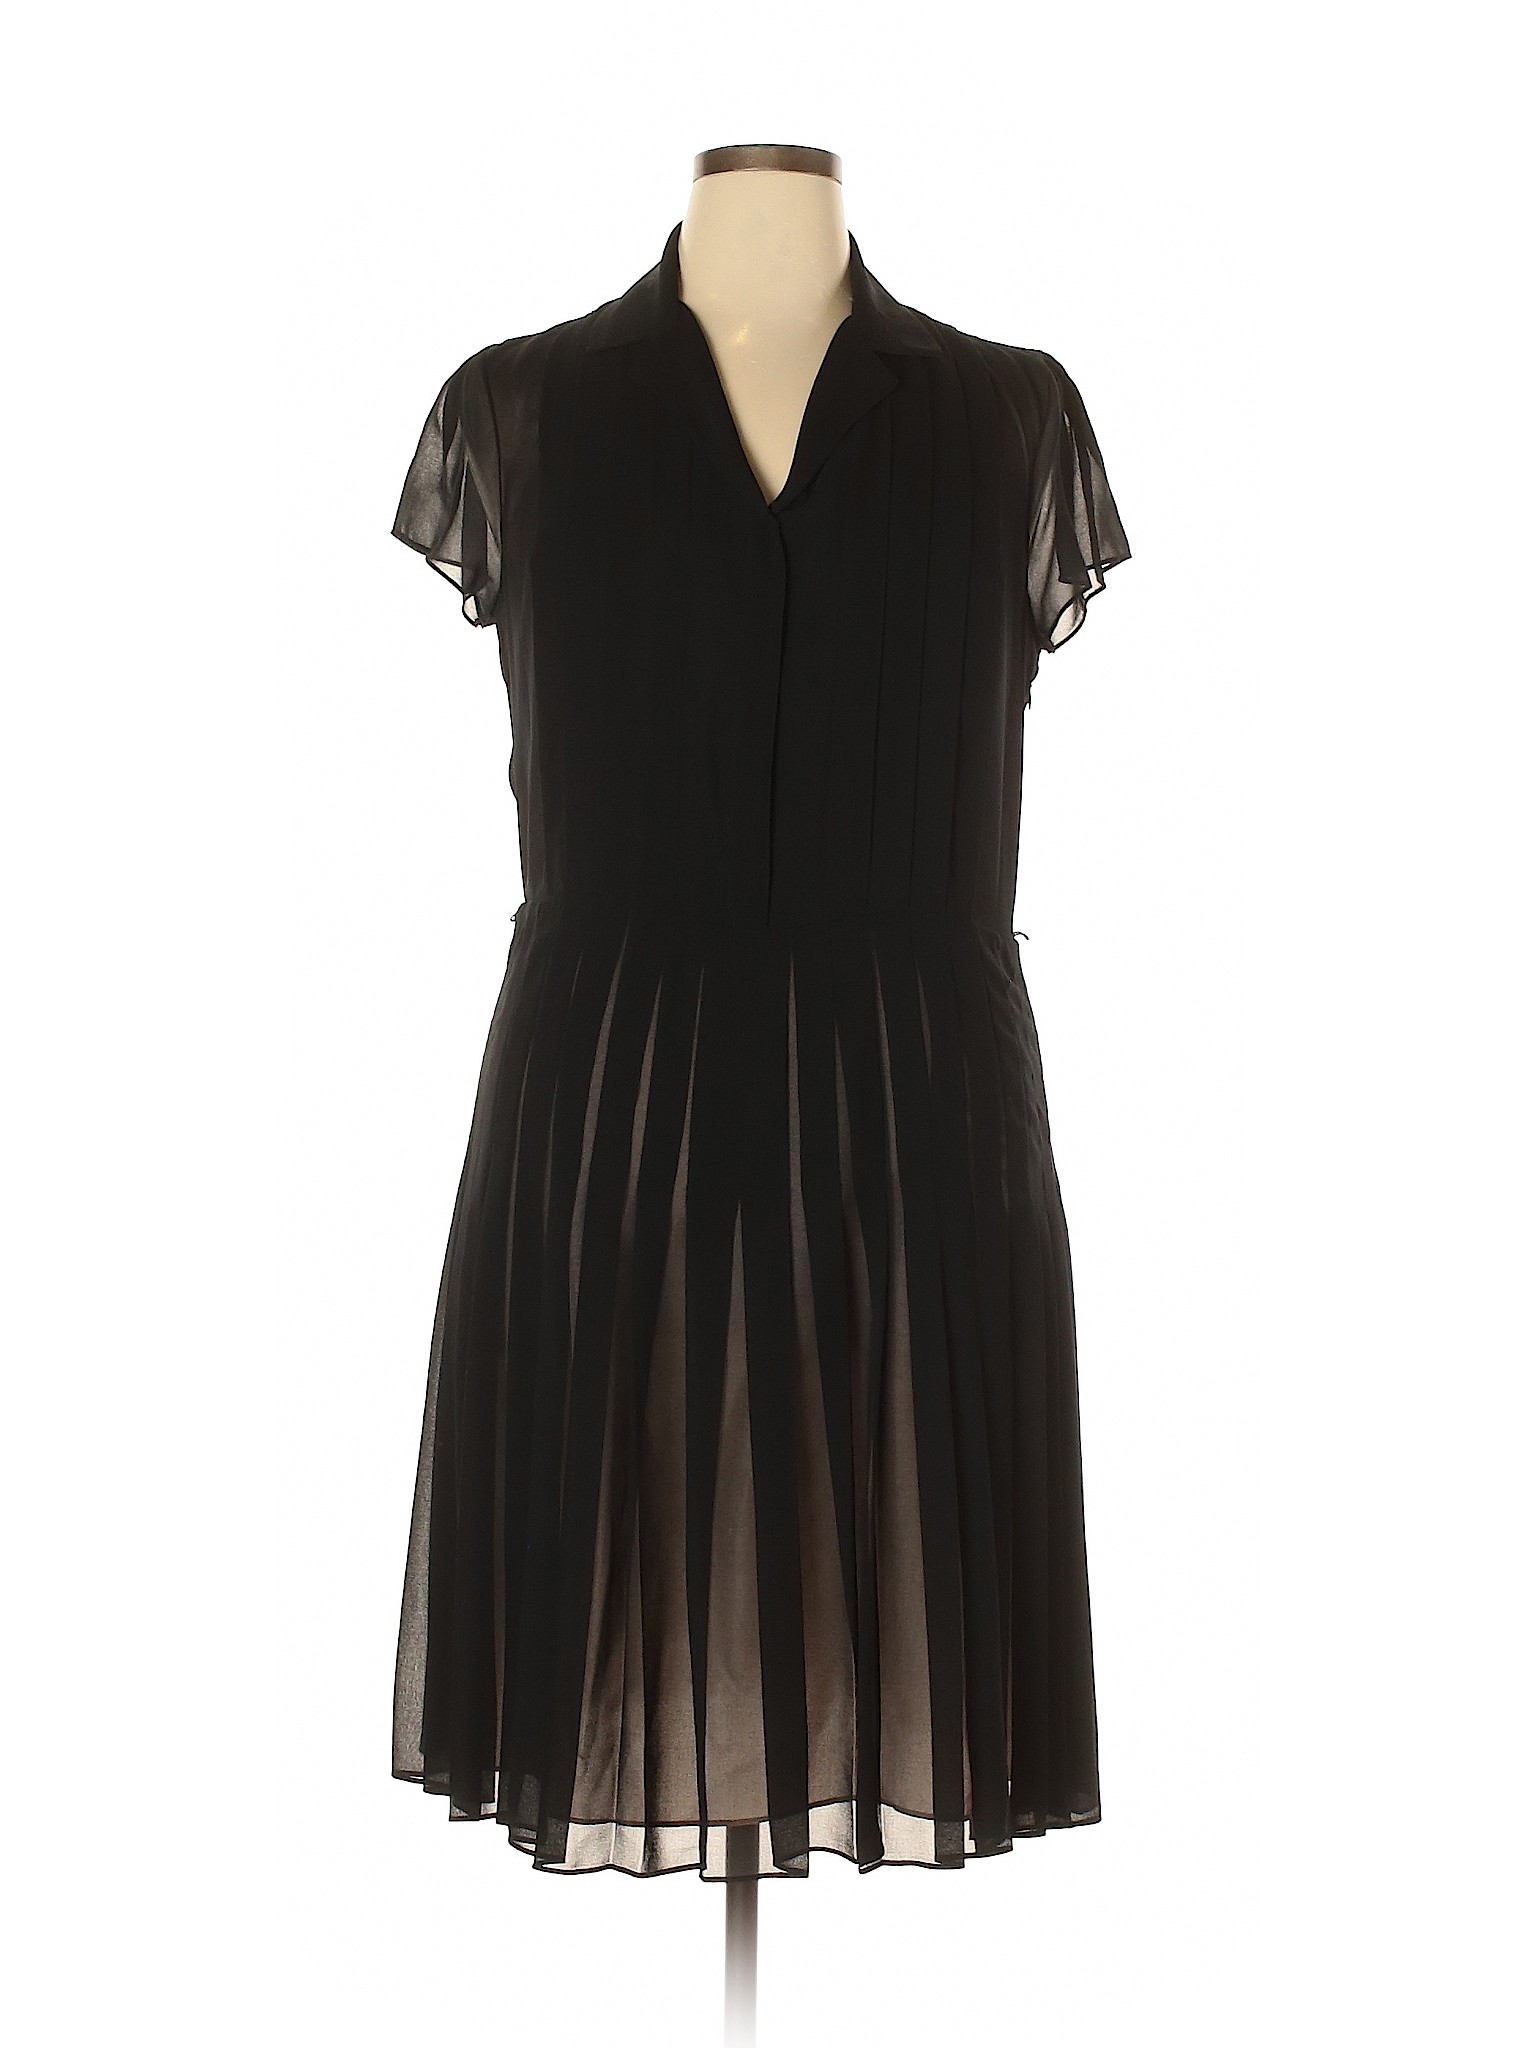 Talbots Women Black Cocktail Dress 16 | eBay